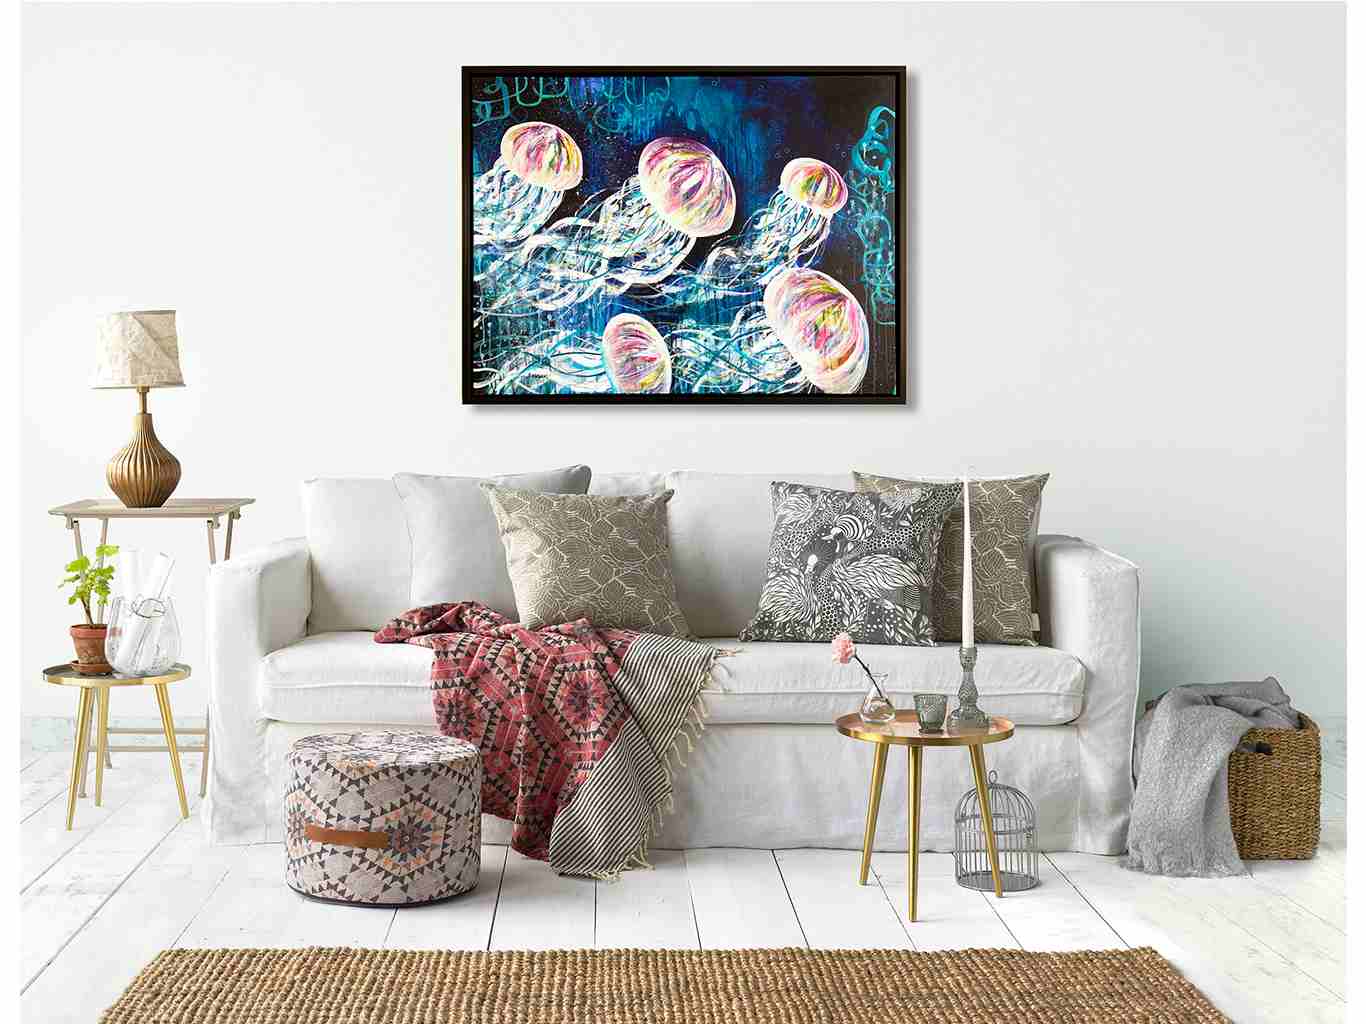 AM 109 Mesusas acrylic - painting - canvas - ocean - jellyfishes - medusas - colorful - art decor - black - floater- frame - Audree Marsolais (4)